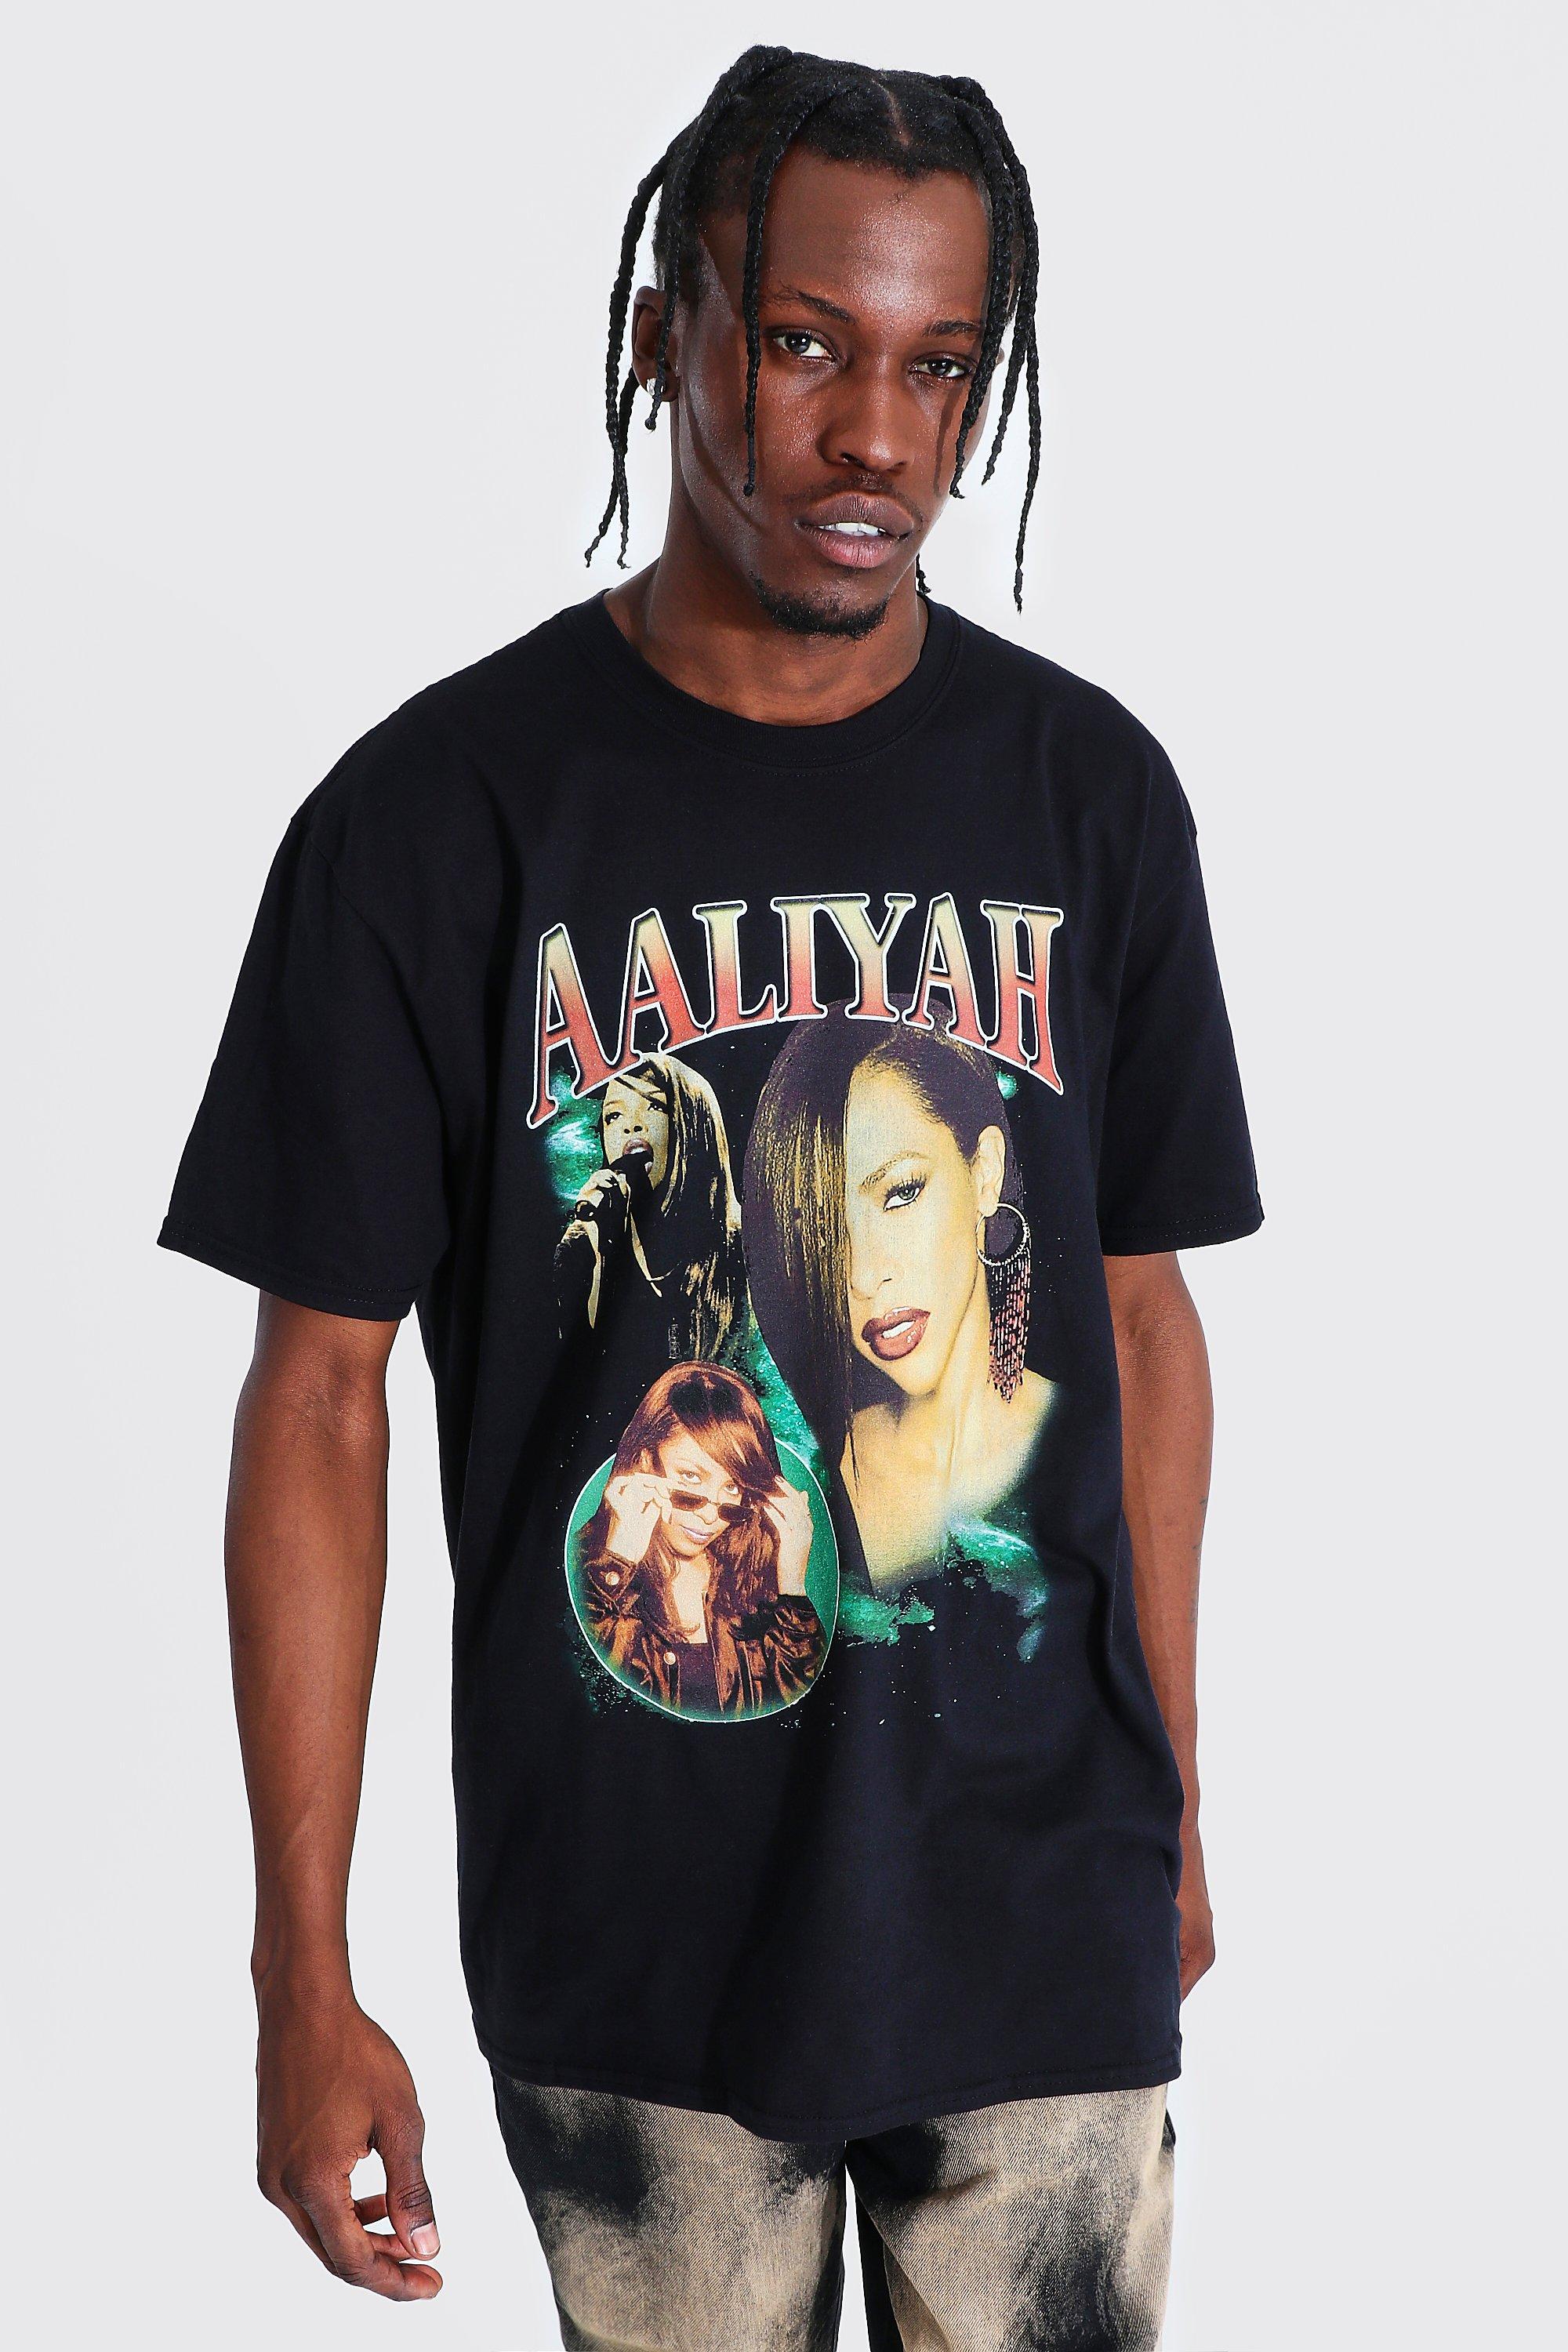 Aaliyah 追悼シャツ tシャツ ラップ 2000s fkip.unmul.ac.id